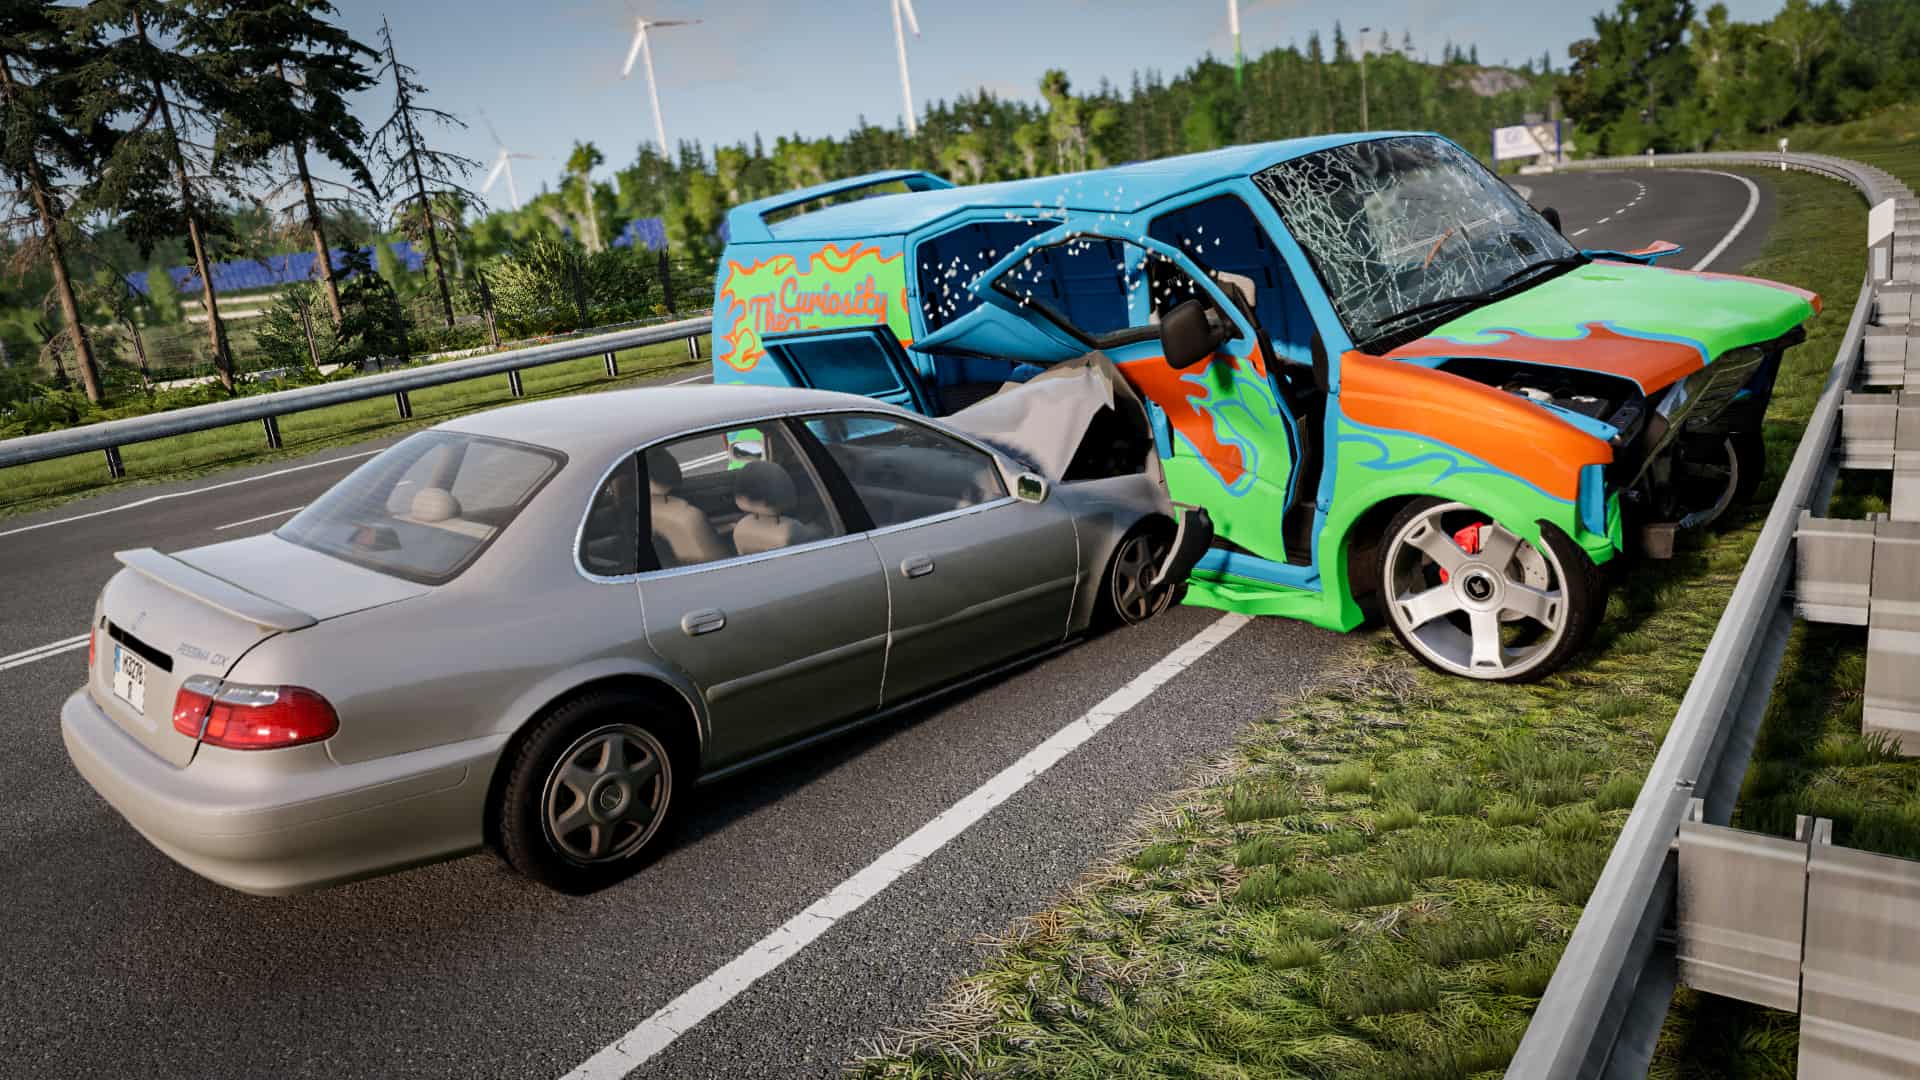 Stream Experience Realistic Car Destruction with Beam Drive Crash